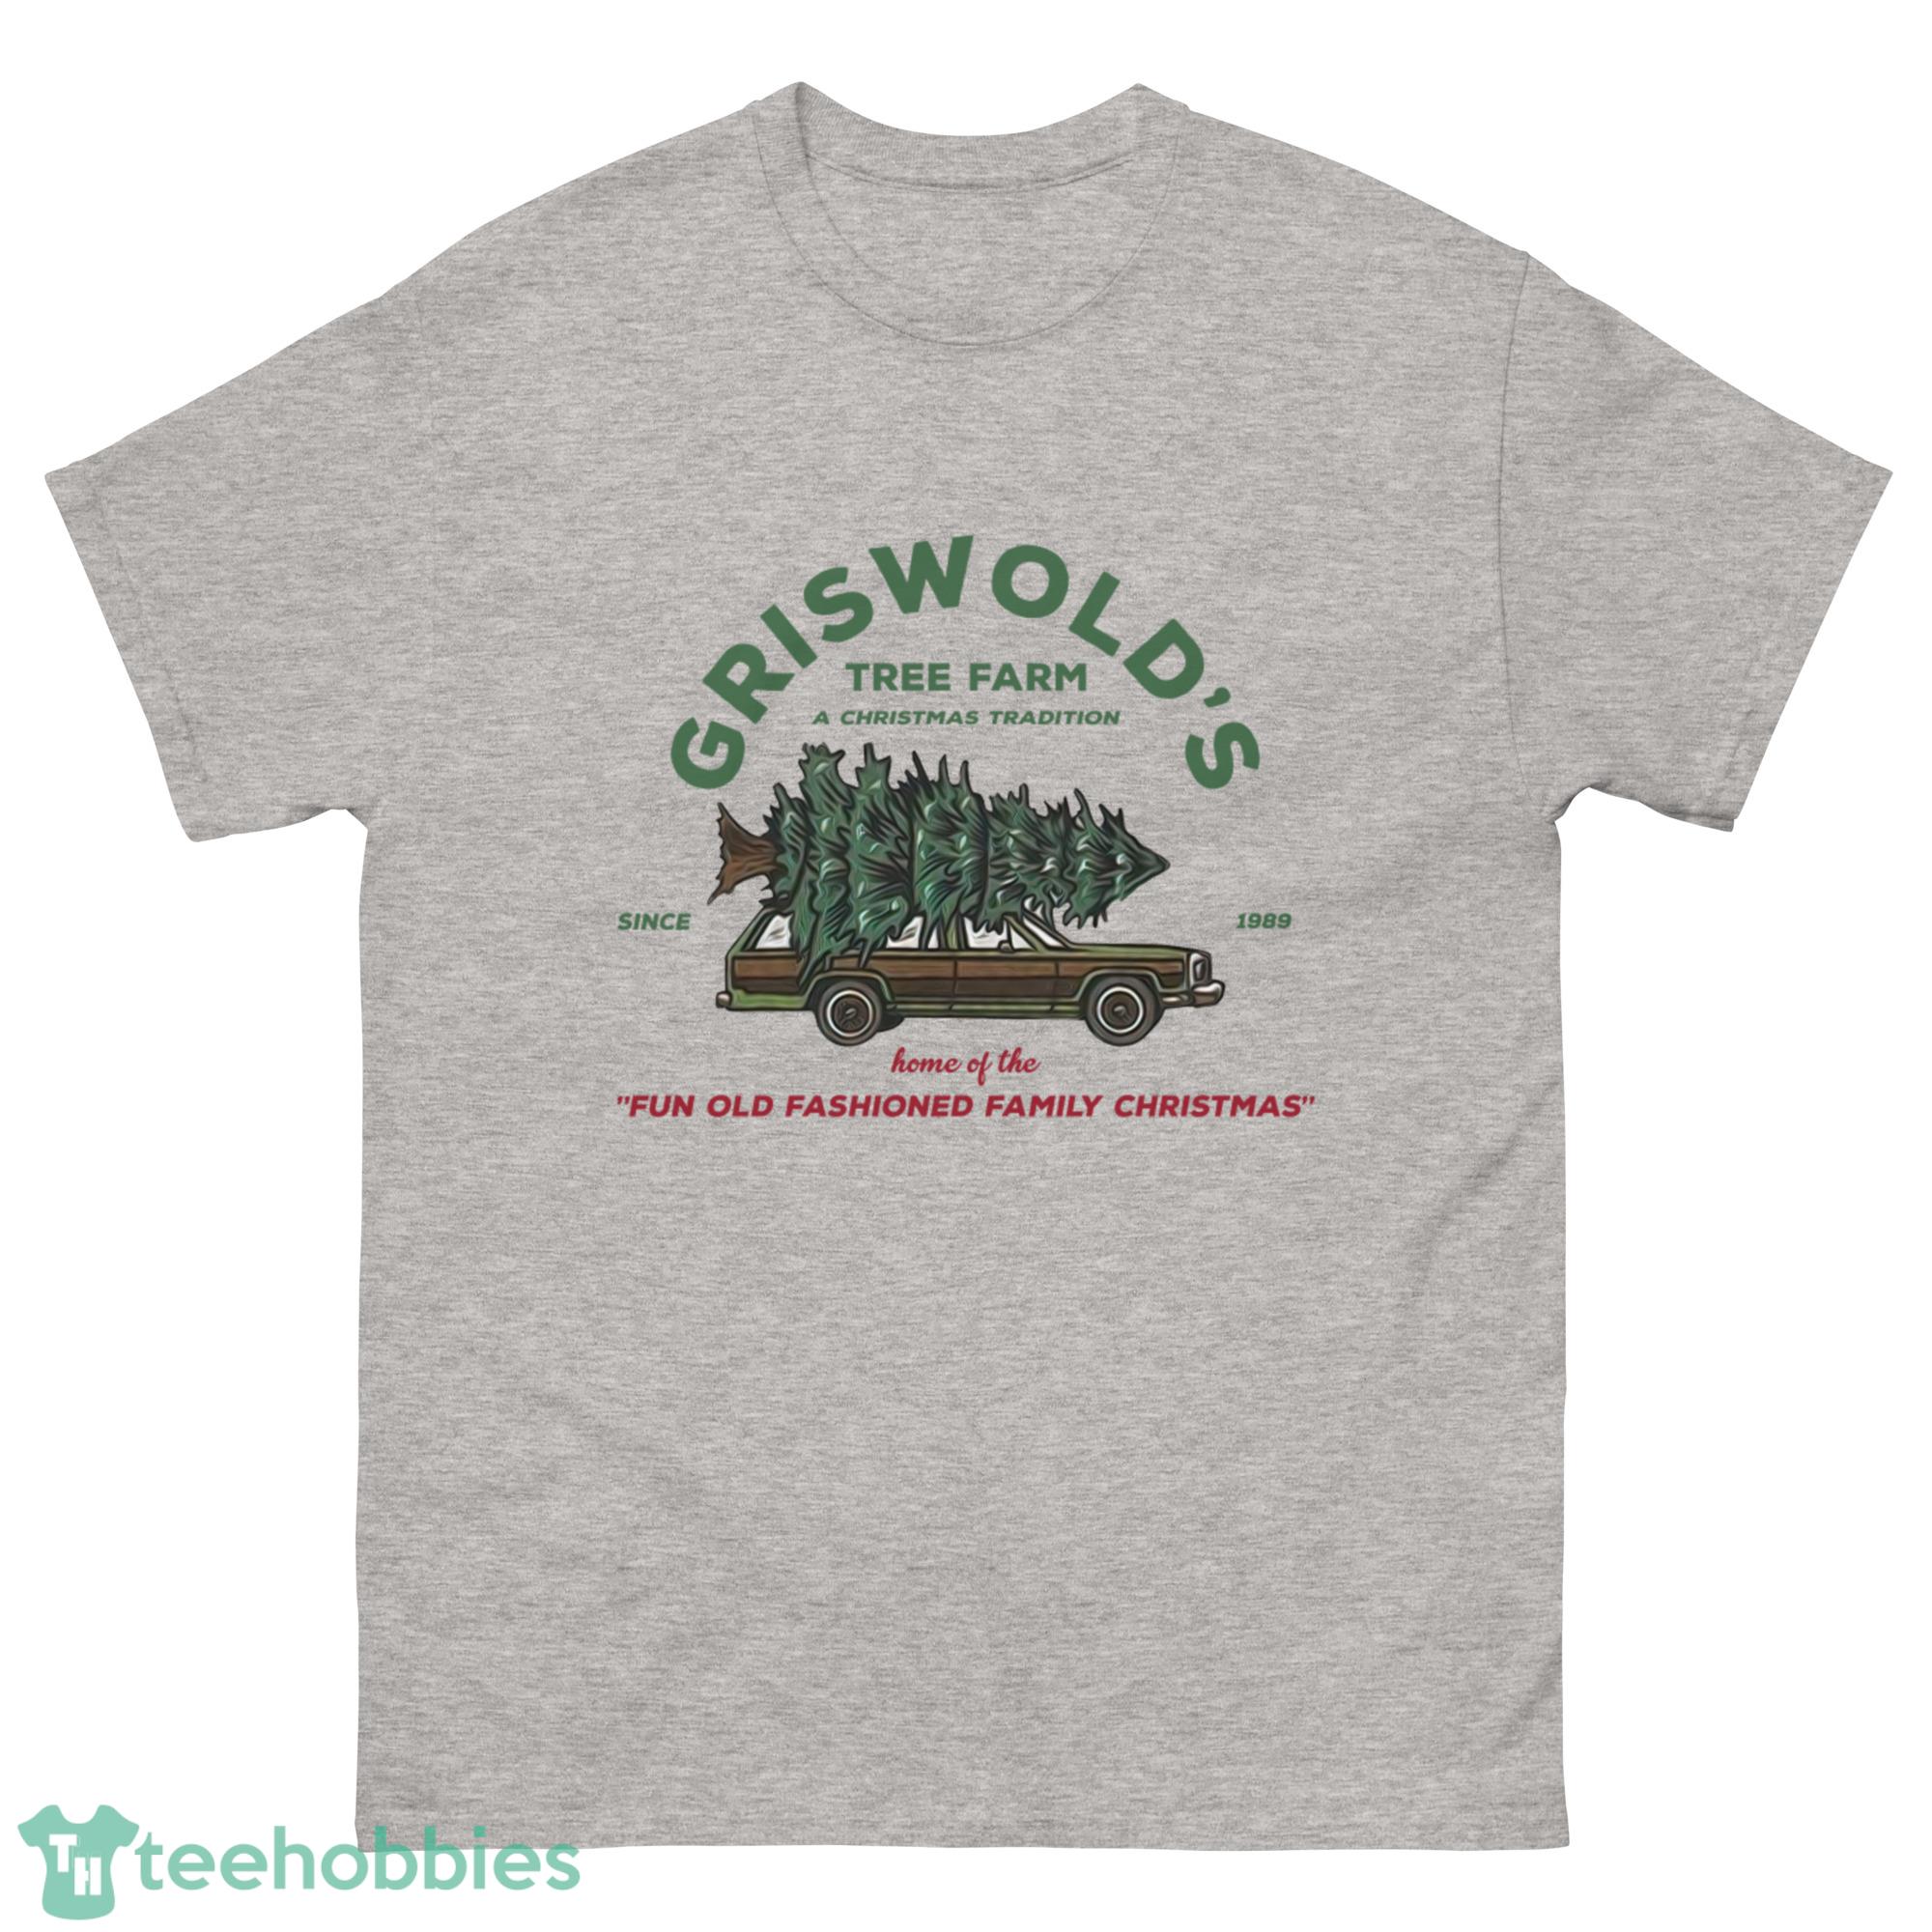 Griswords Tree Farm Christmas Tree Shirt - G500 Men’s Classic T-Shirt